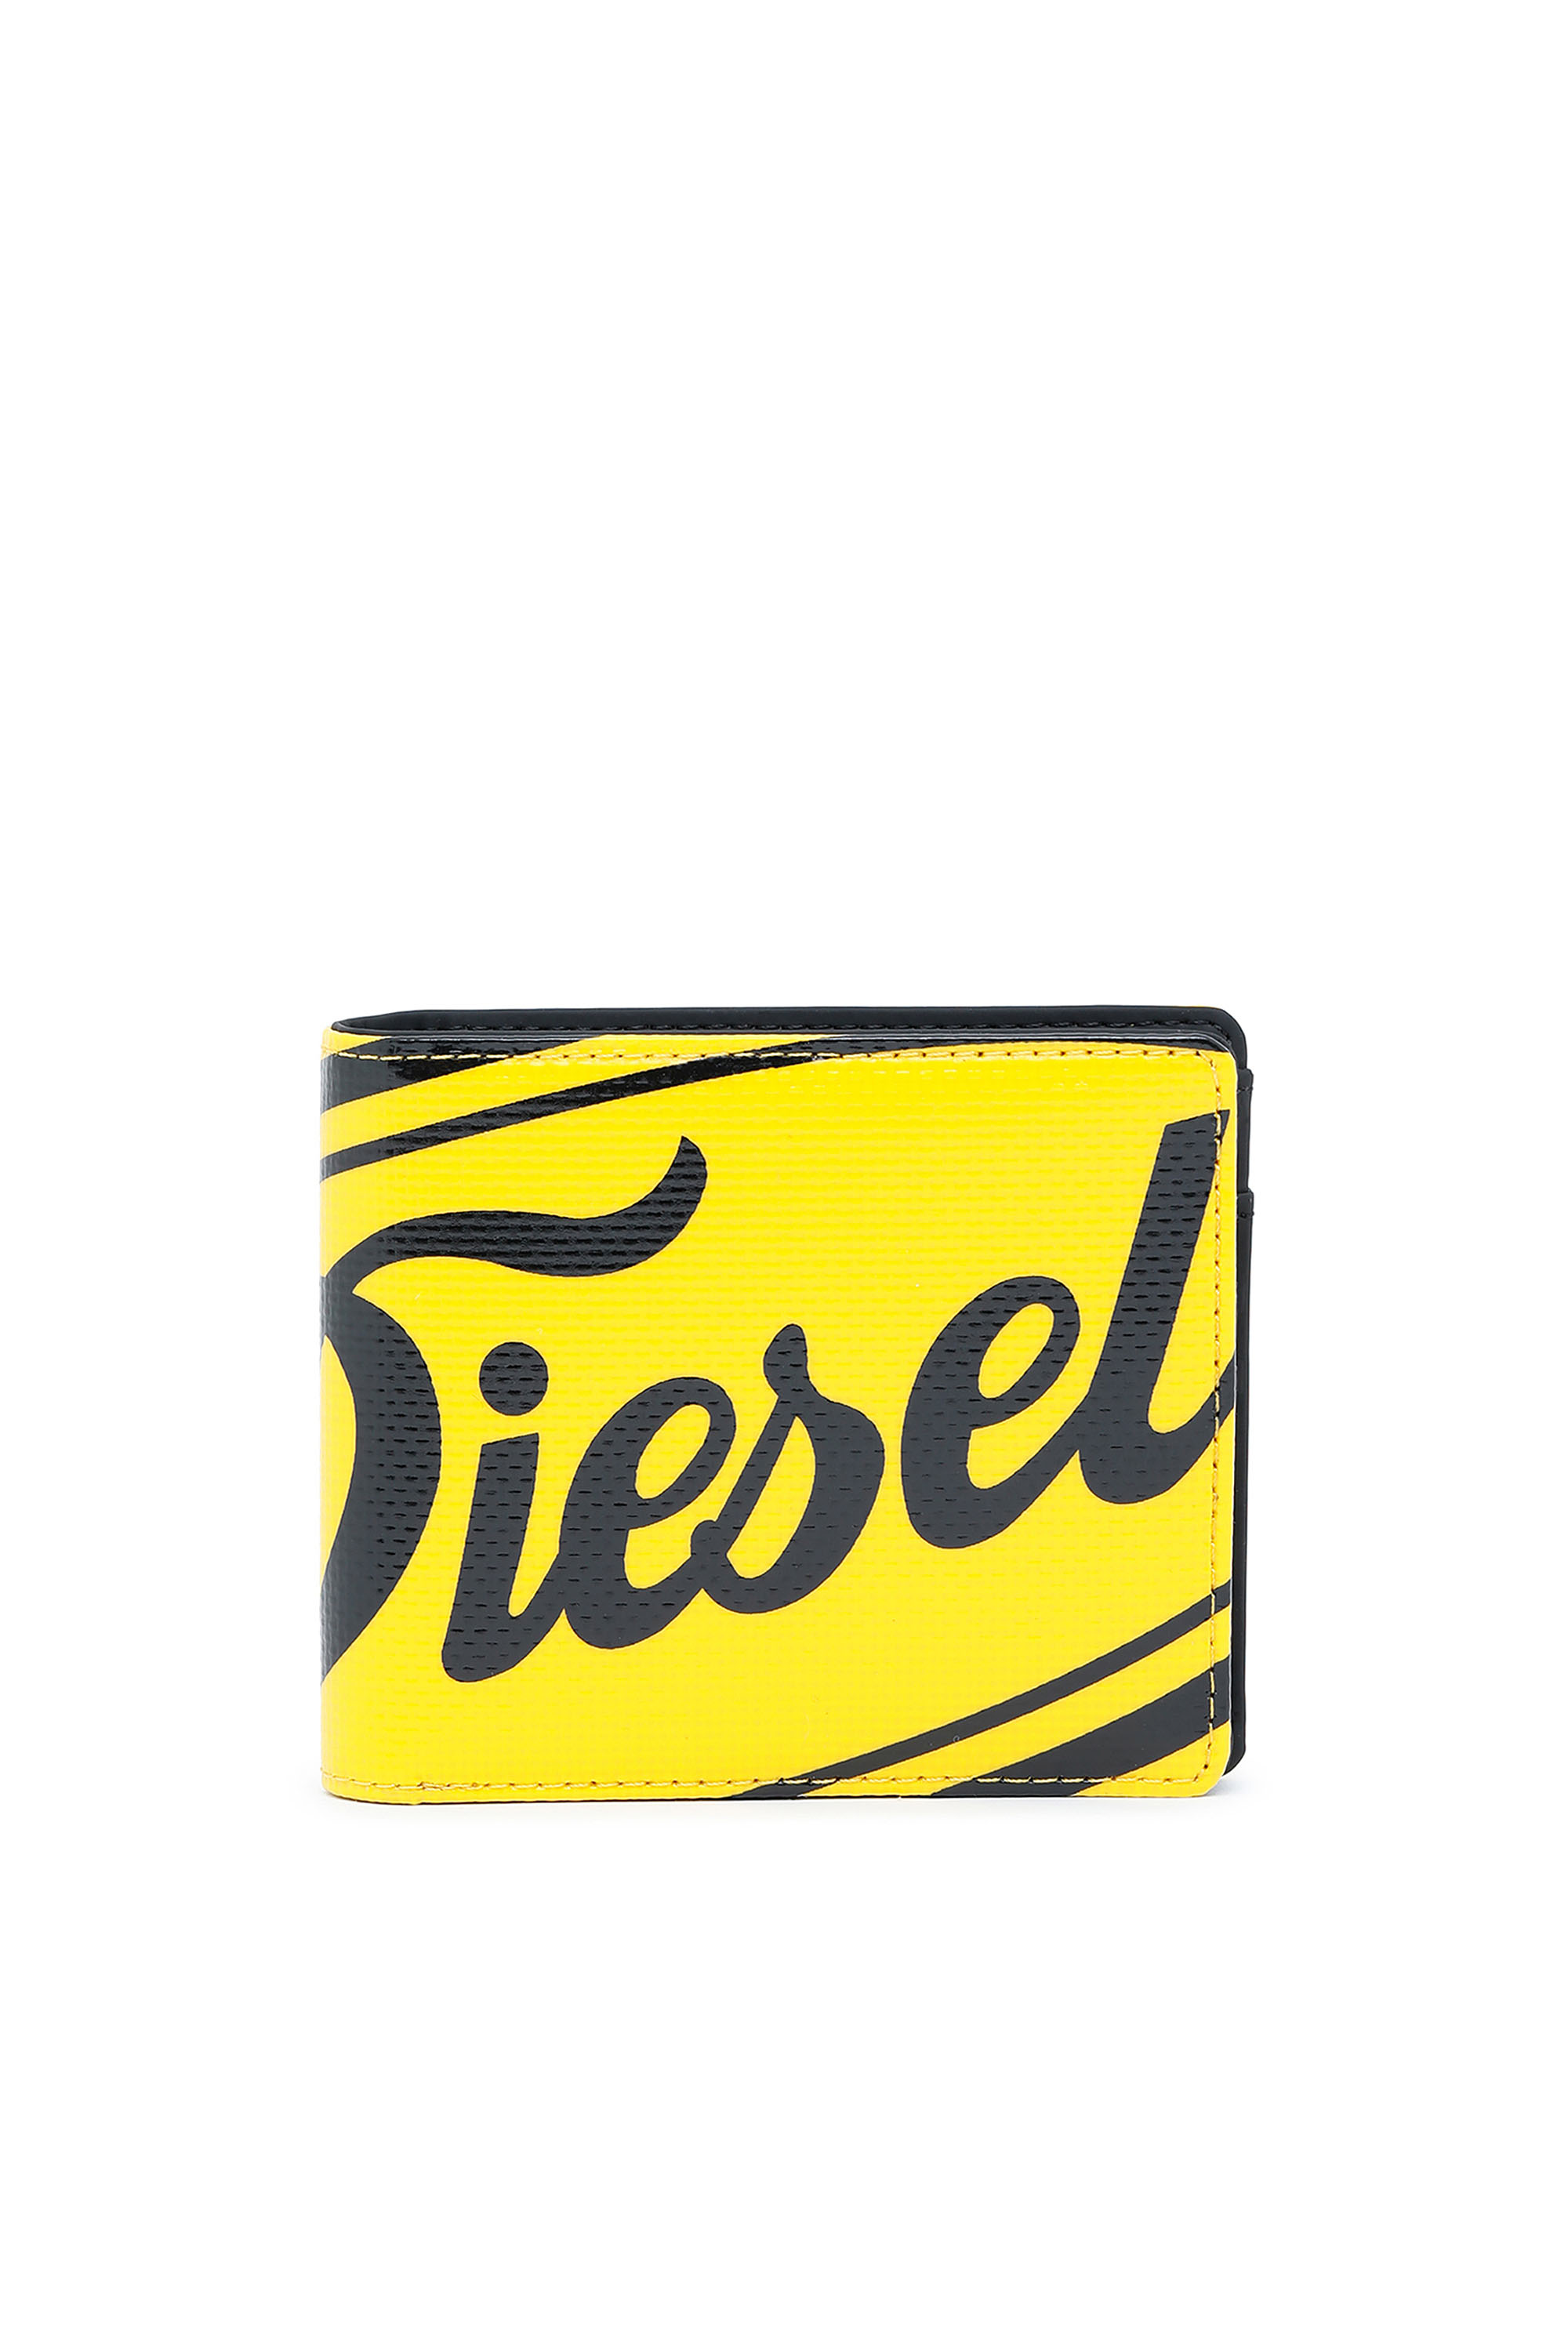 Diesel - HIRESH S, Yellow - Image 1